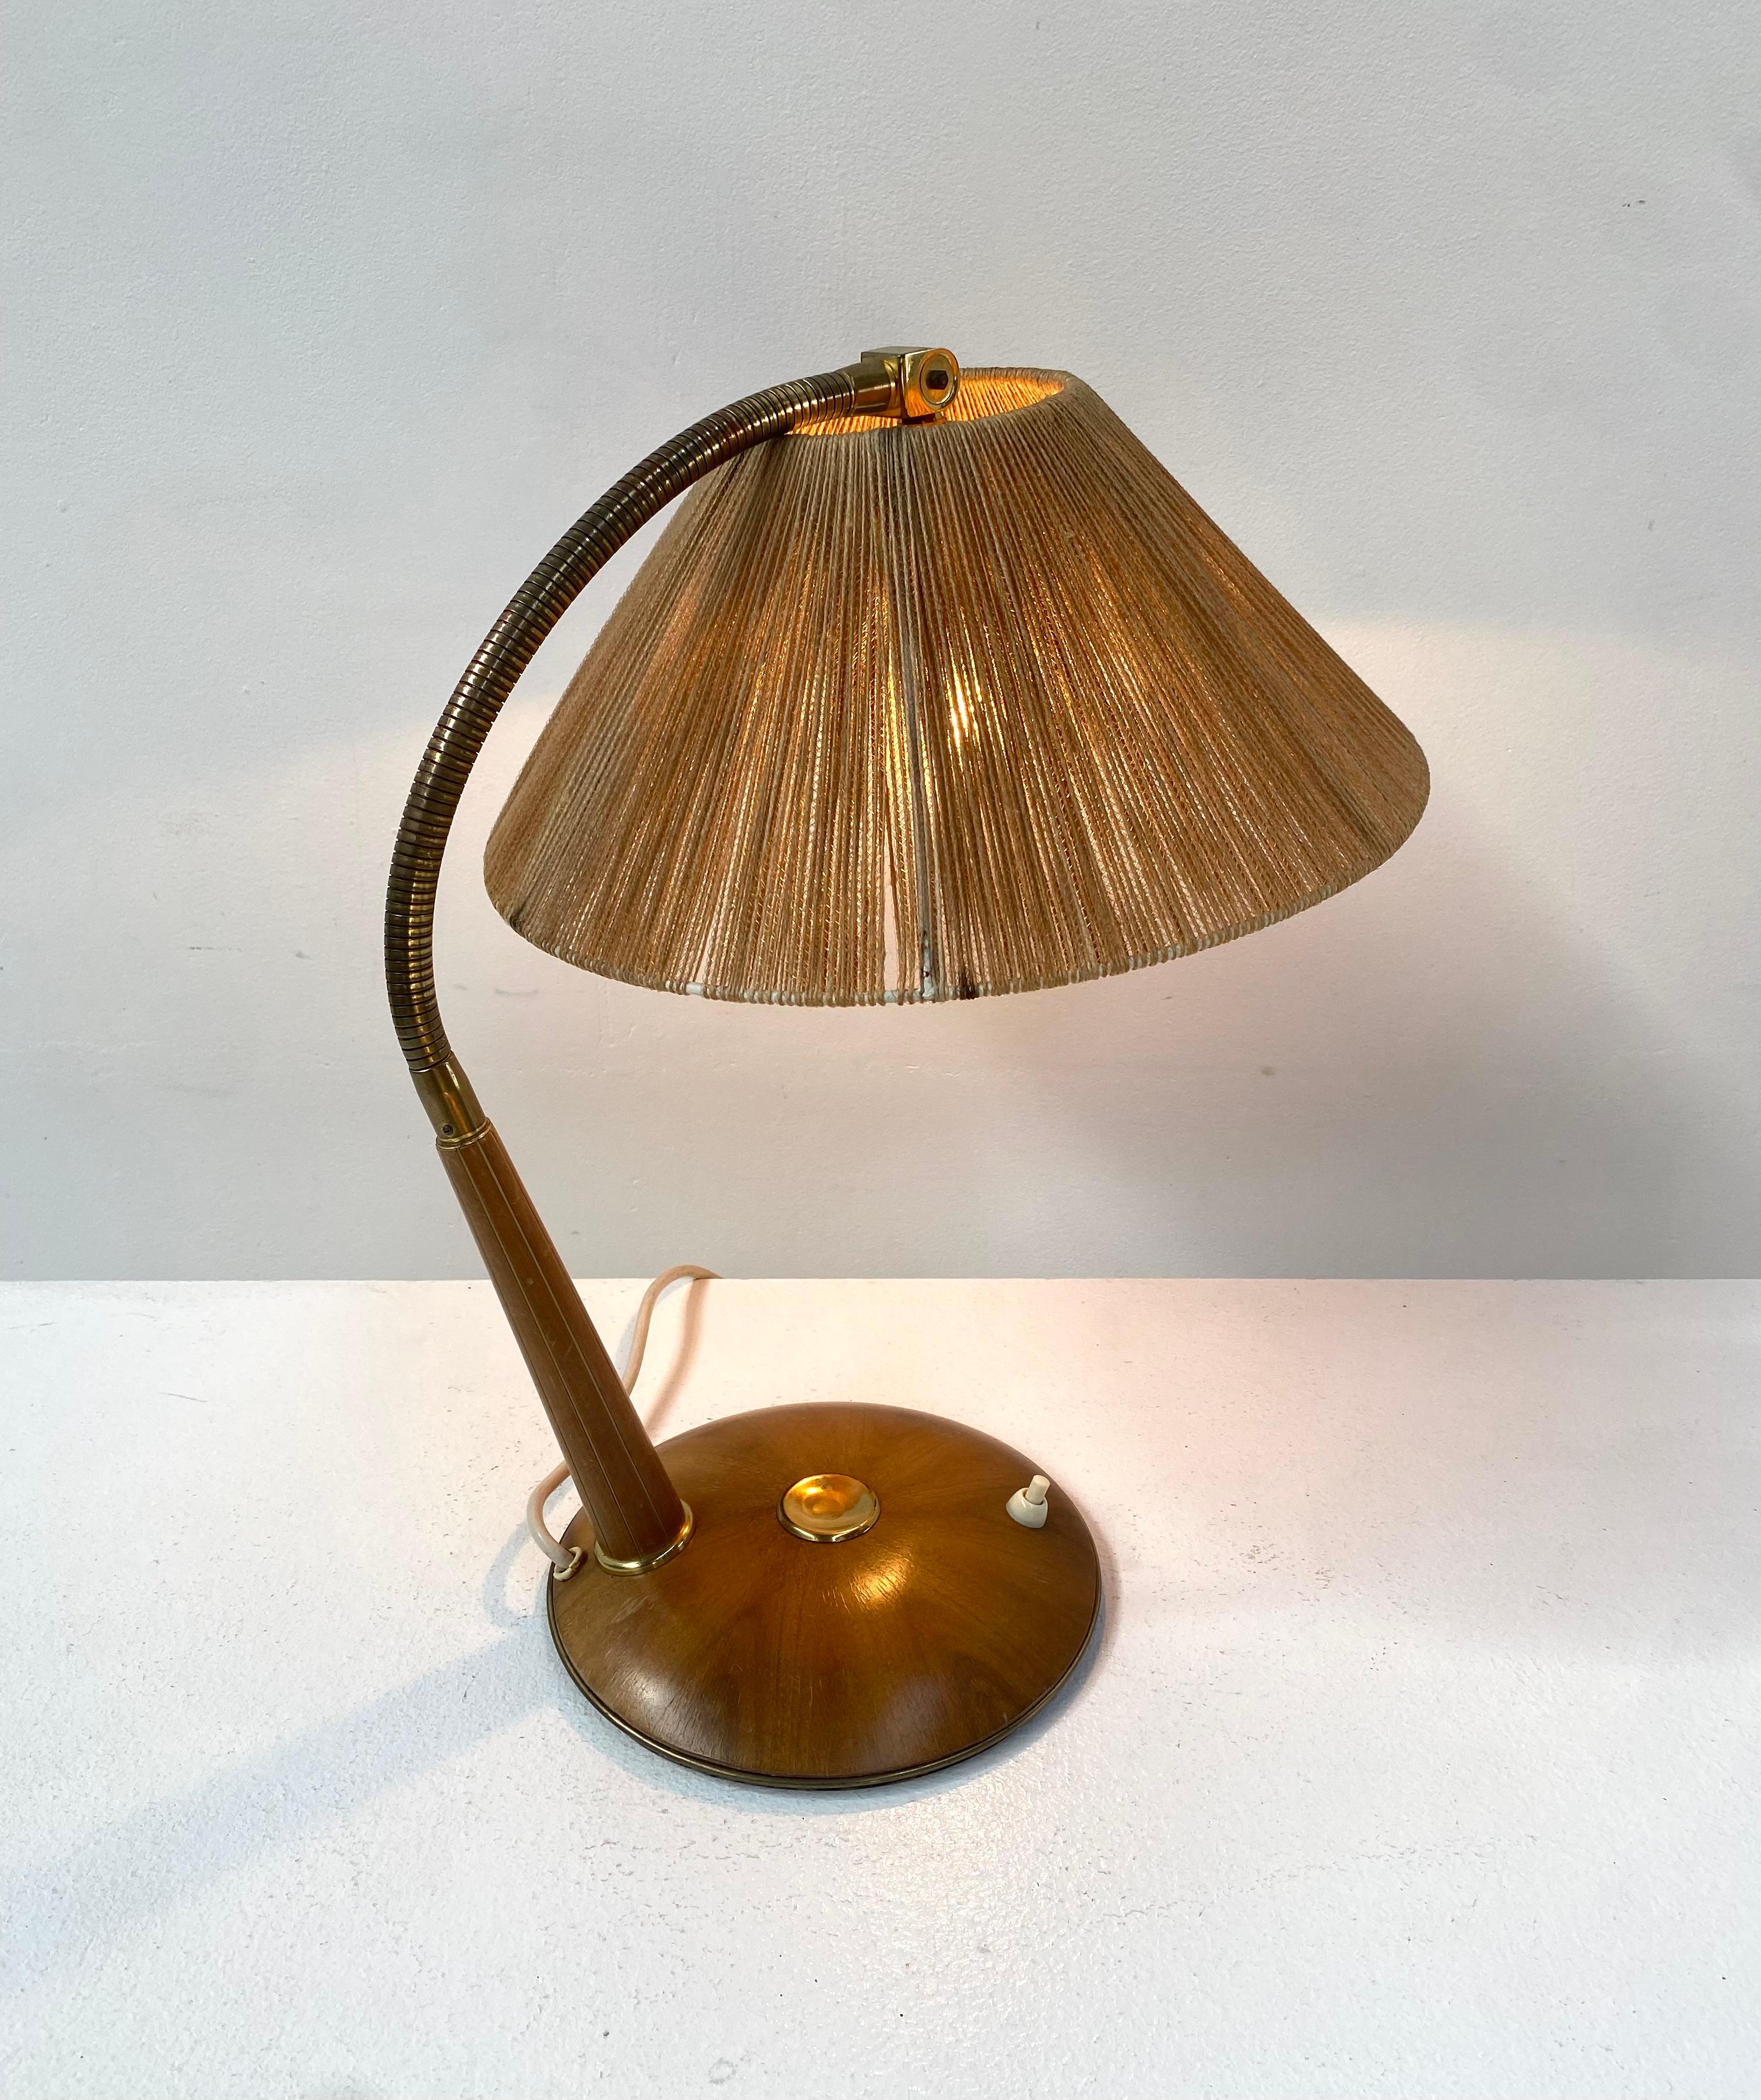 Brass Swiss Teak Table Lamp,  Mod. 2655,  by Frits Muller for Temde Leuchten, 1970s.